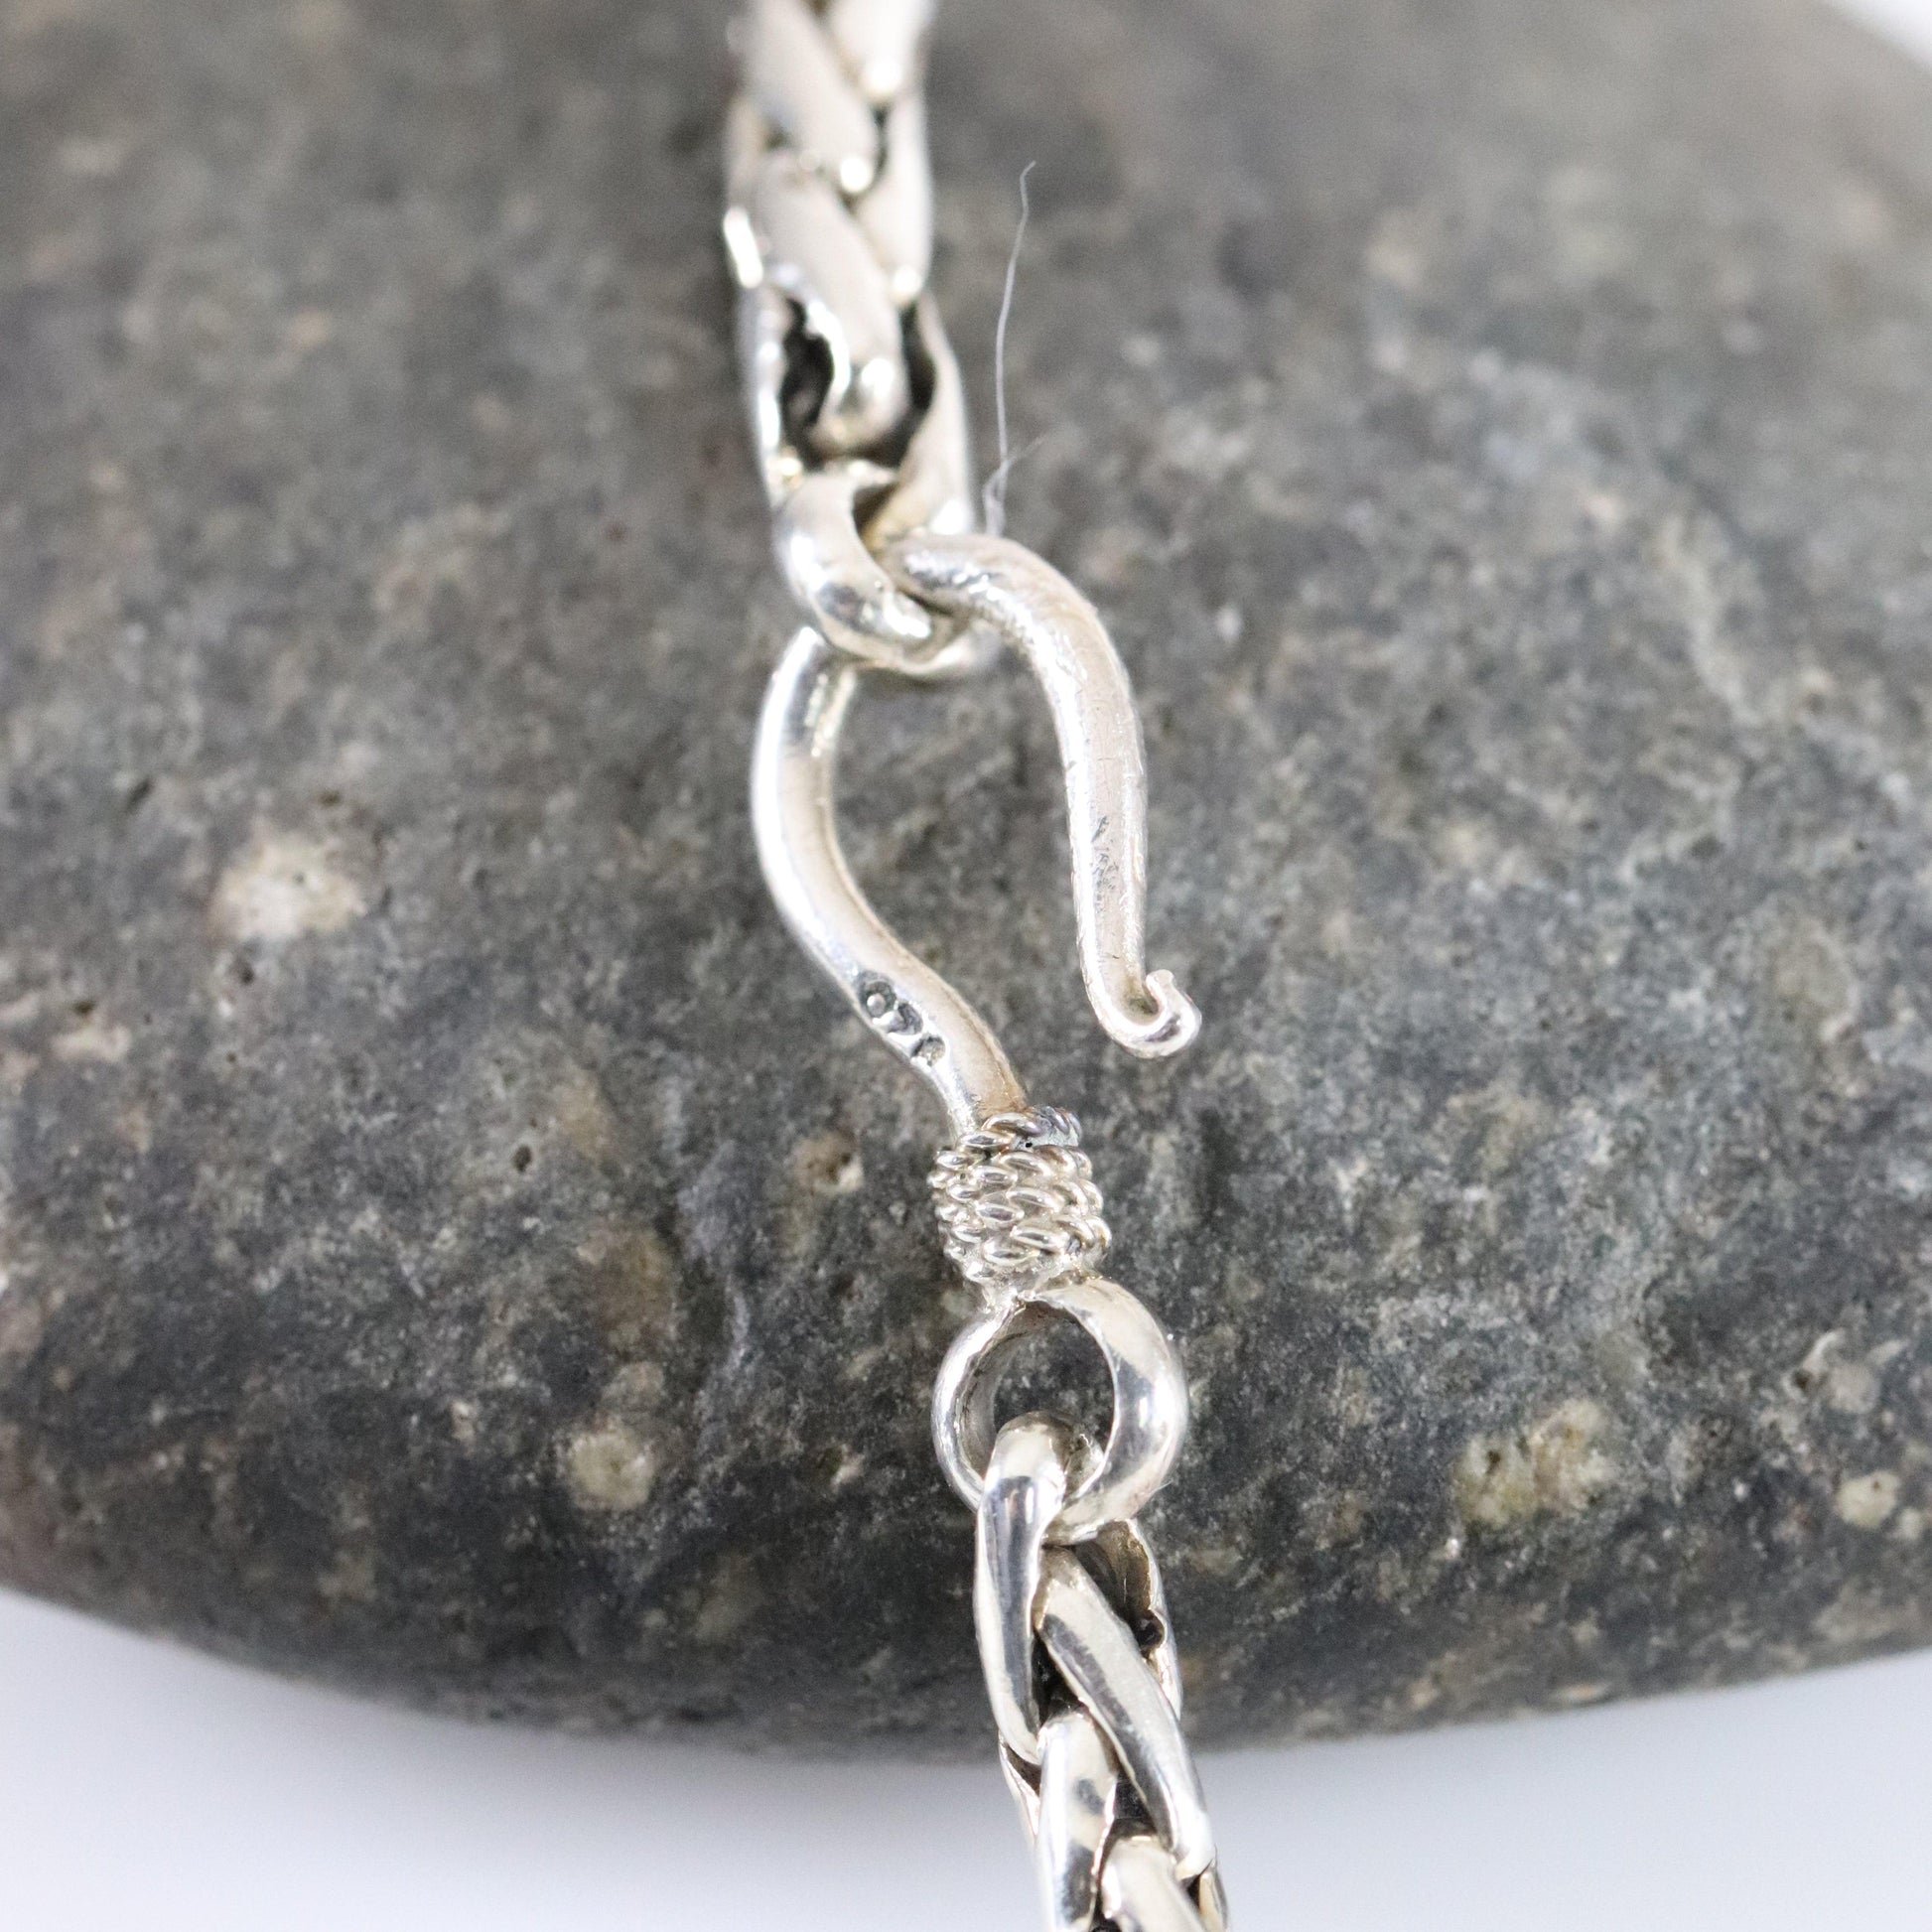 Vintage Silver Jewelry | Byzantine Chain Link Necklace 16" 4mm - Carmel Fine Silver Jewelry